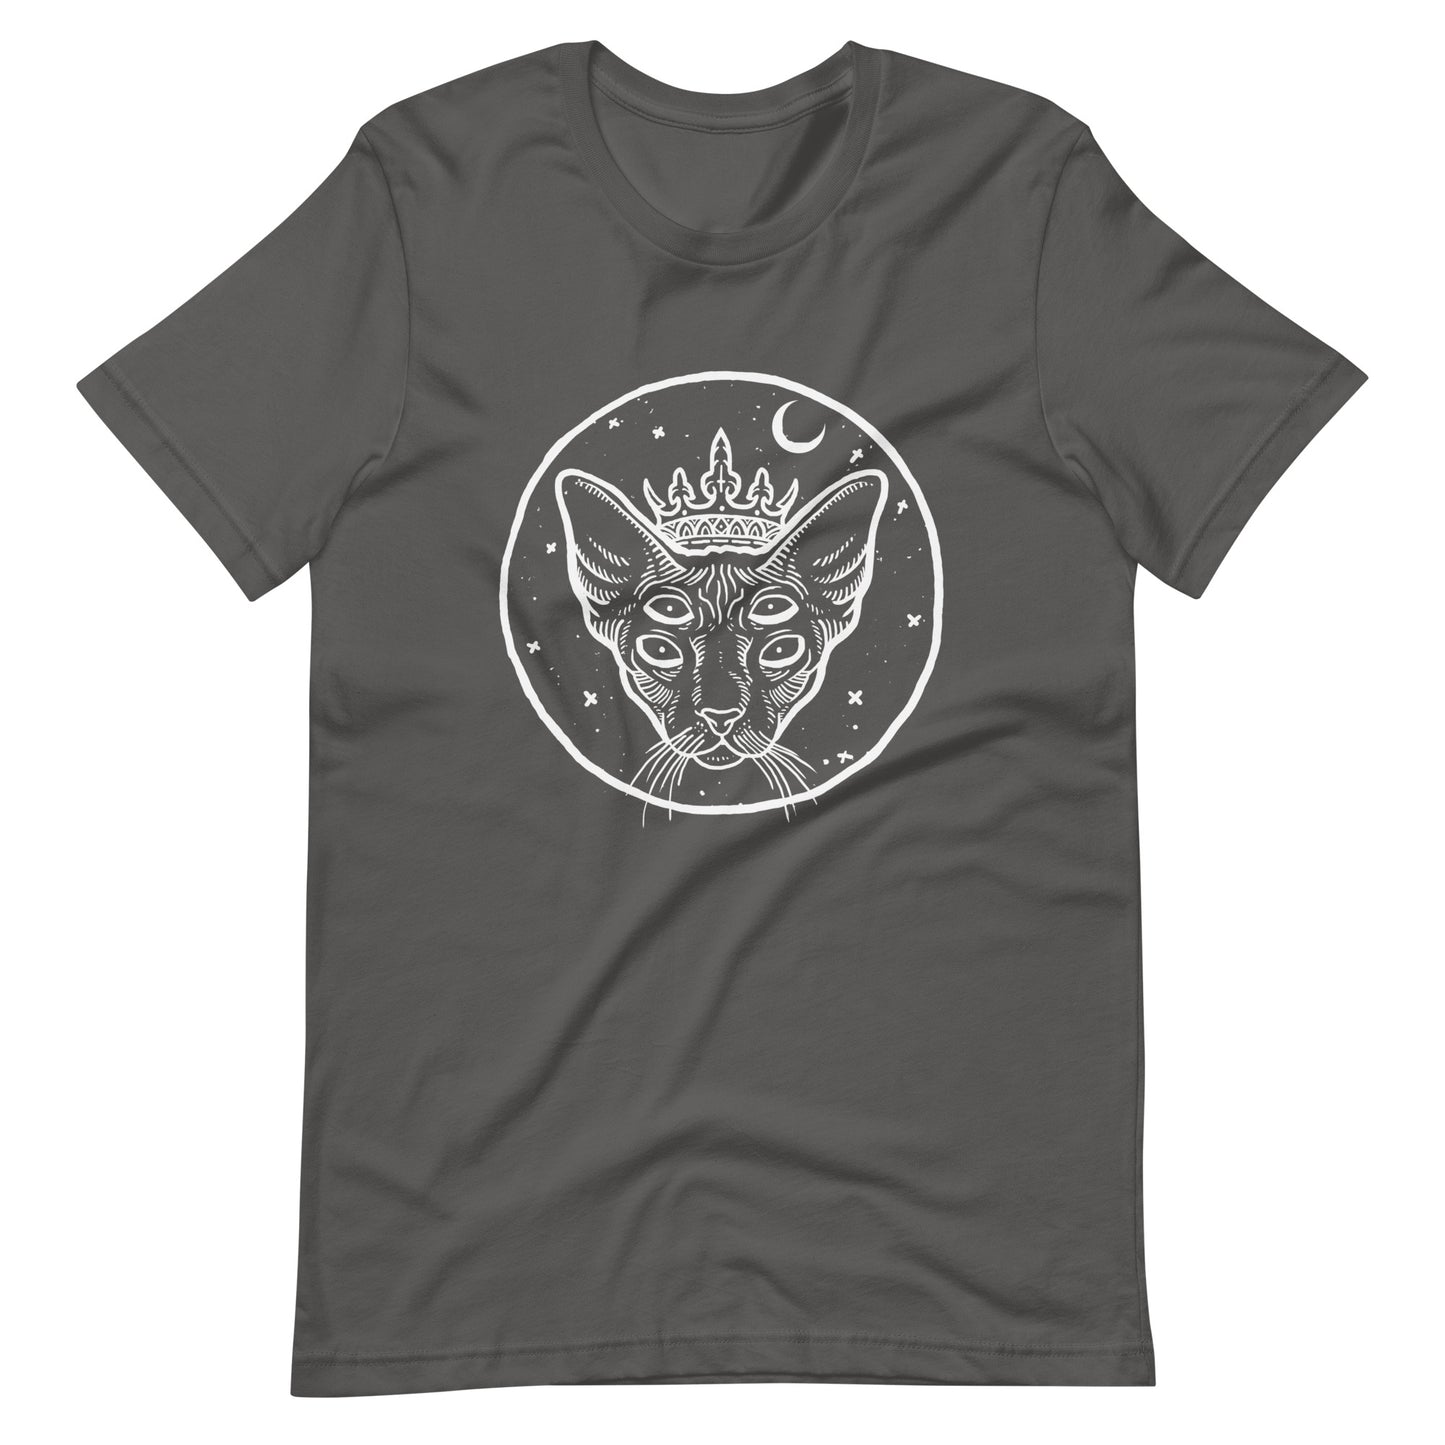 The Ruler - Men's t-shirt - Asphalt Front